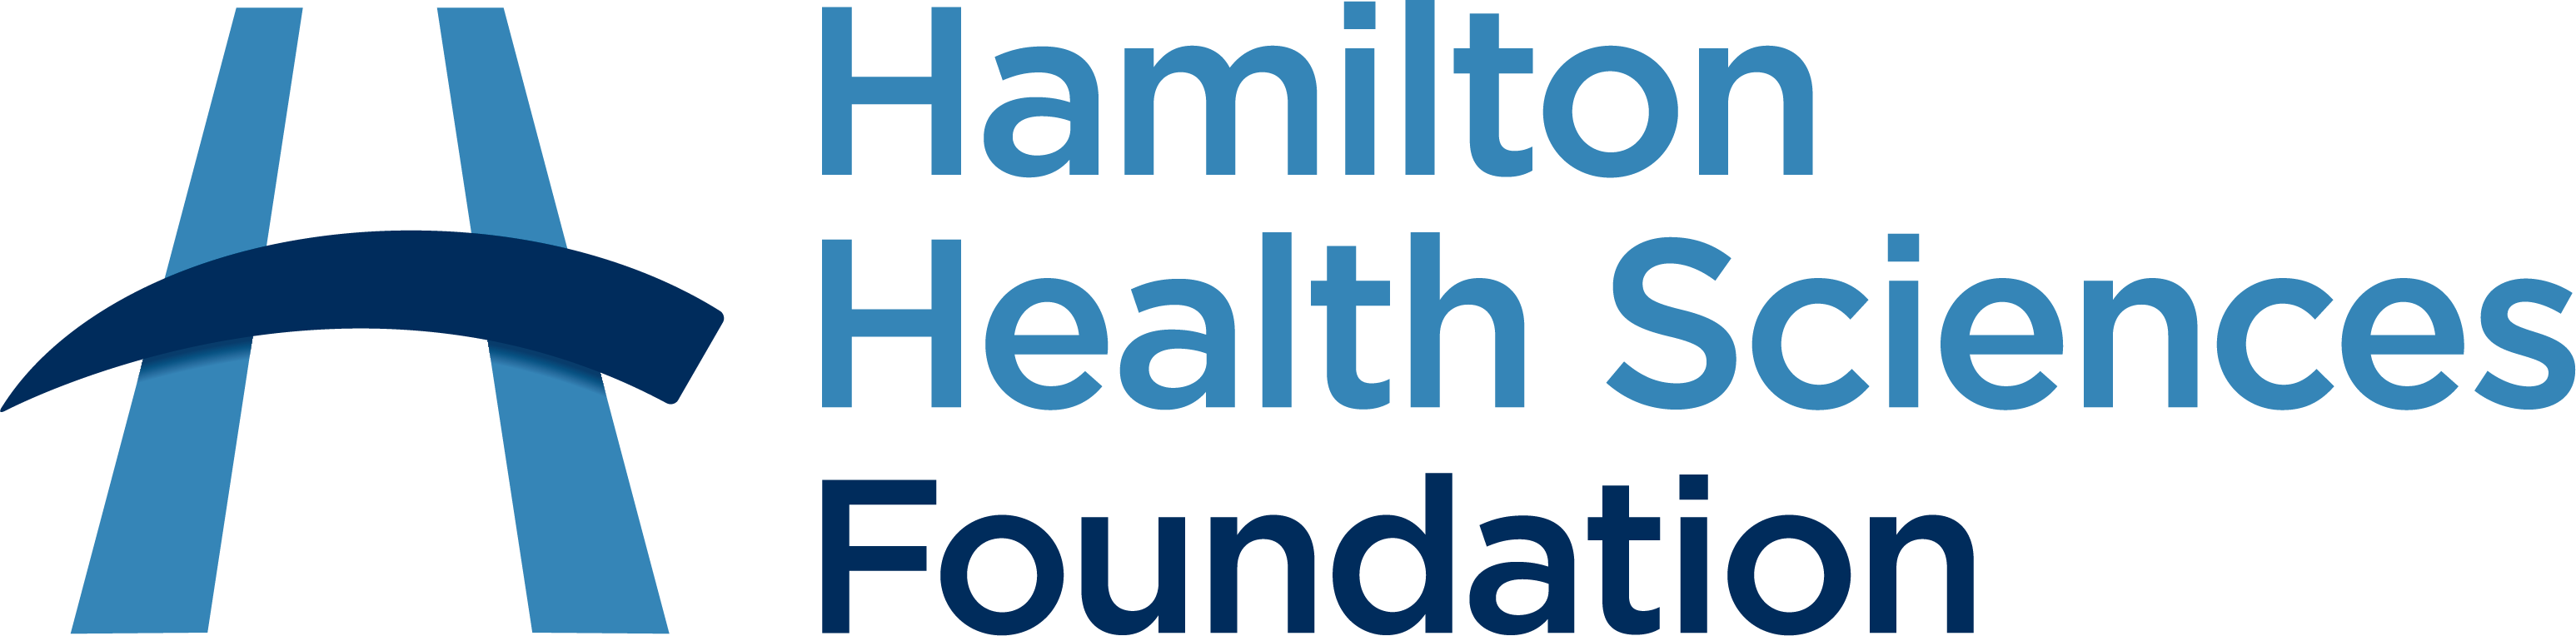 HAMILTON HEALTH SCIENCES FOUNDATION